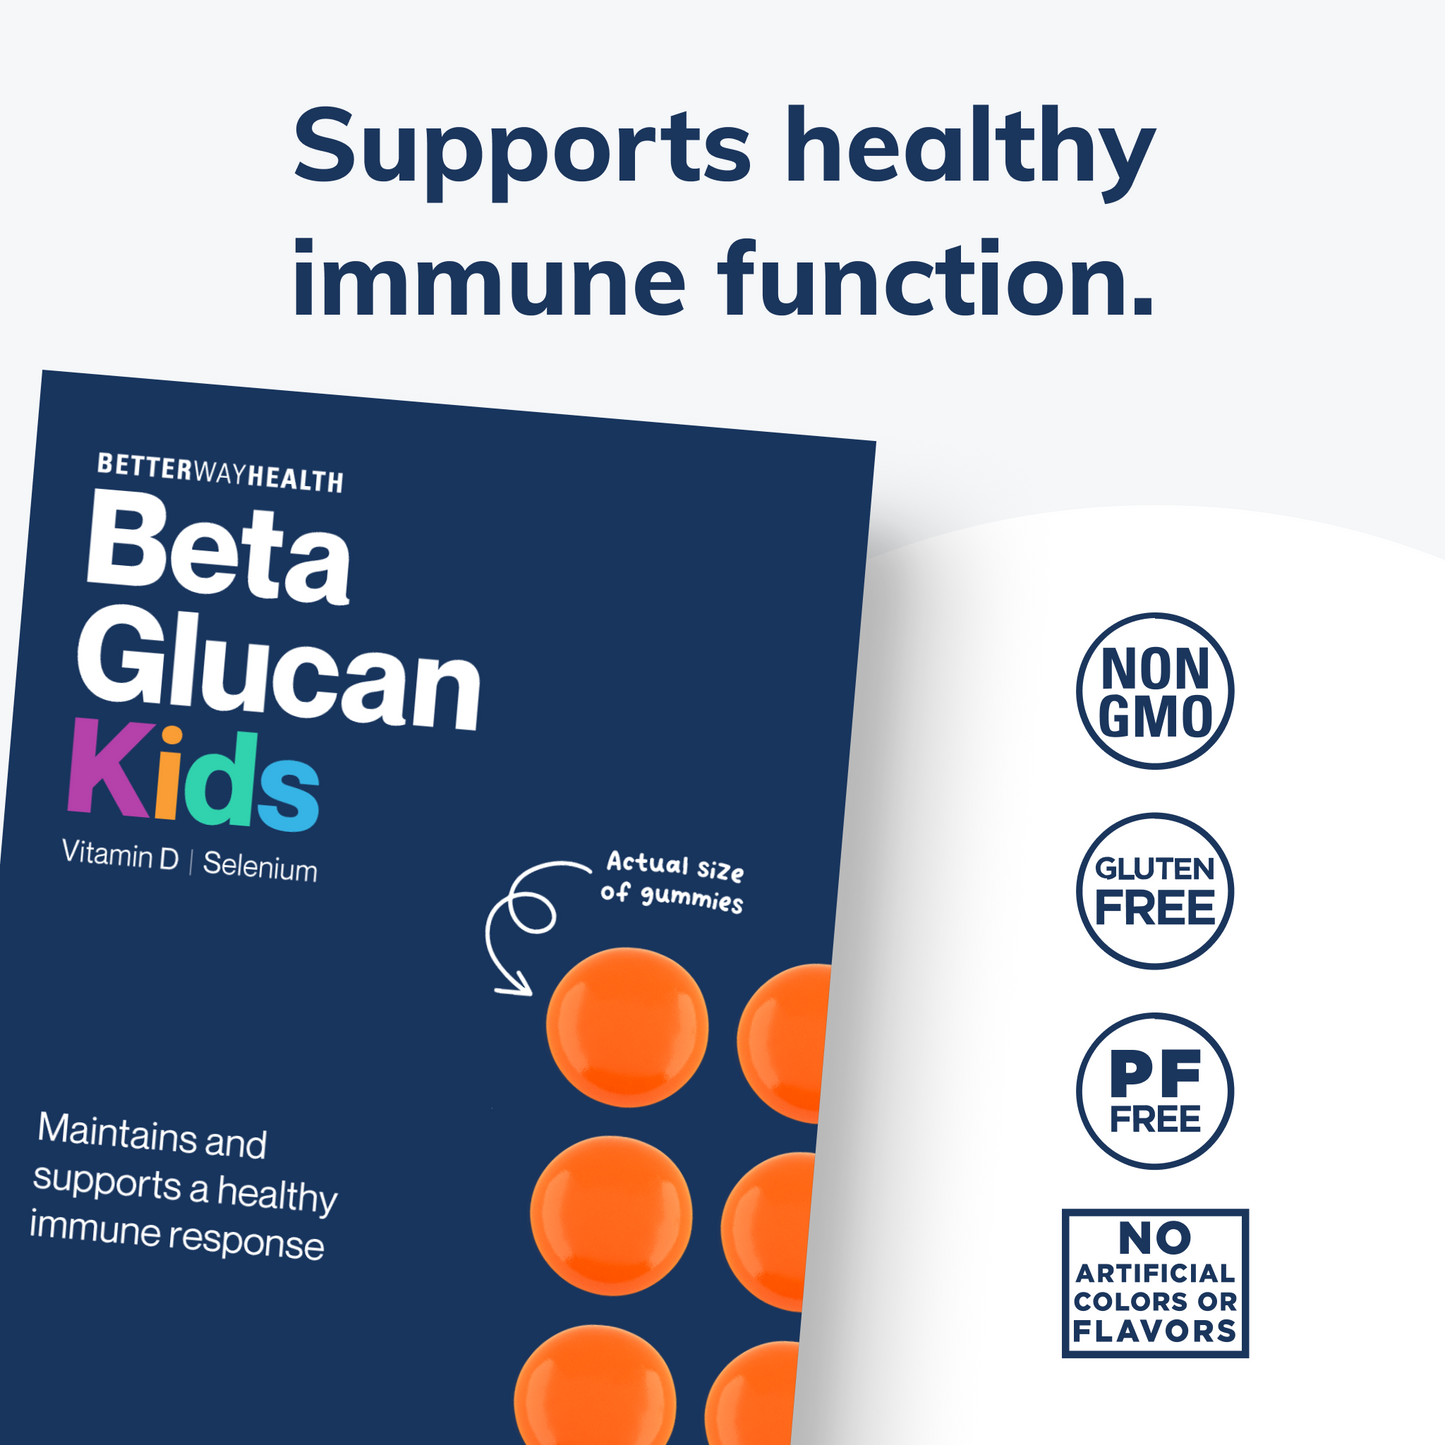 Beta Glucan Kids by Better Way Health